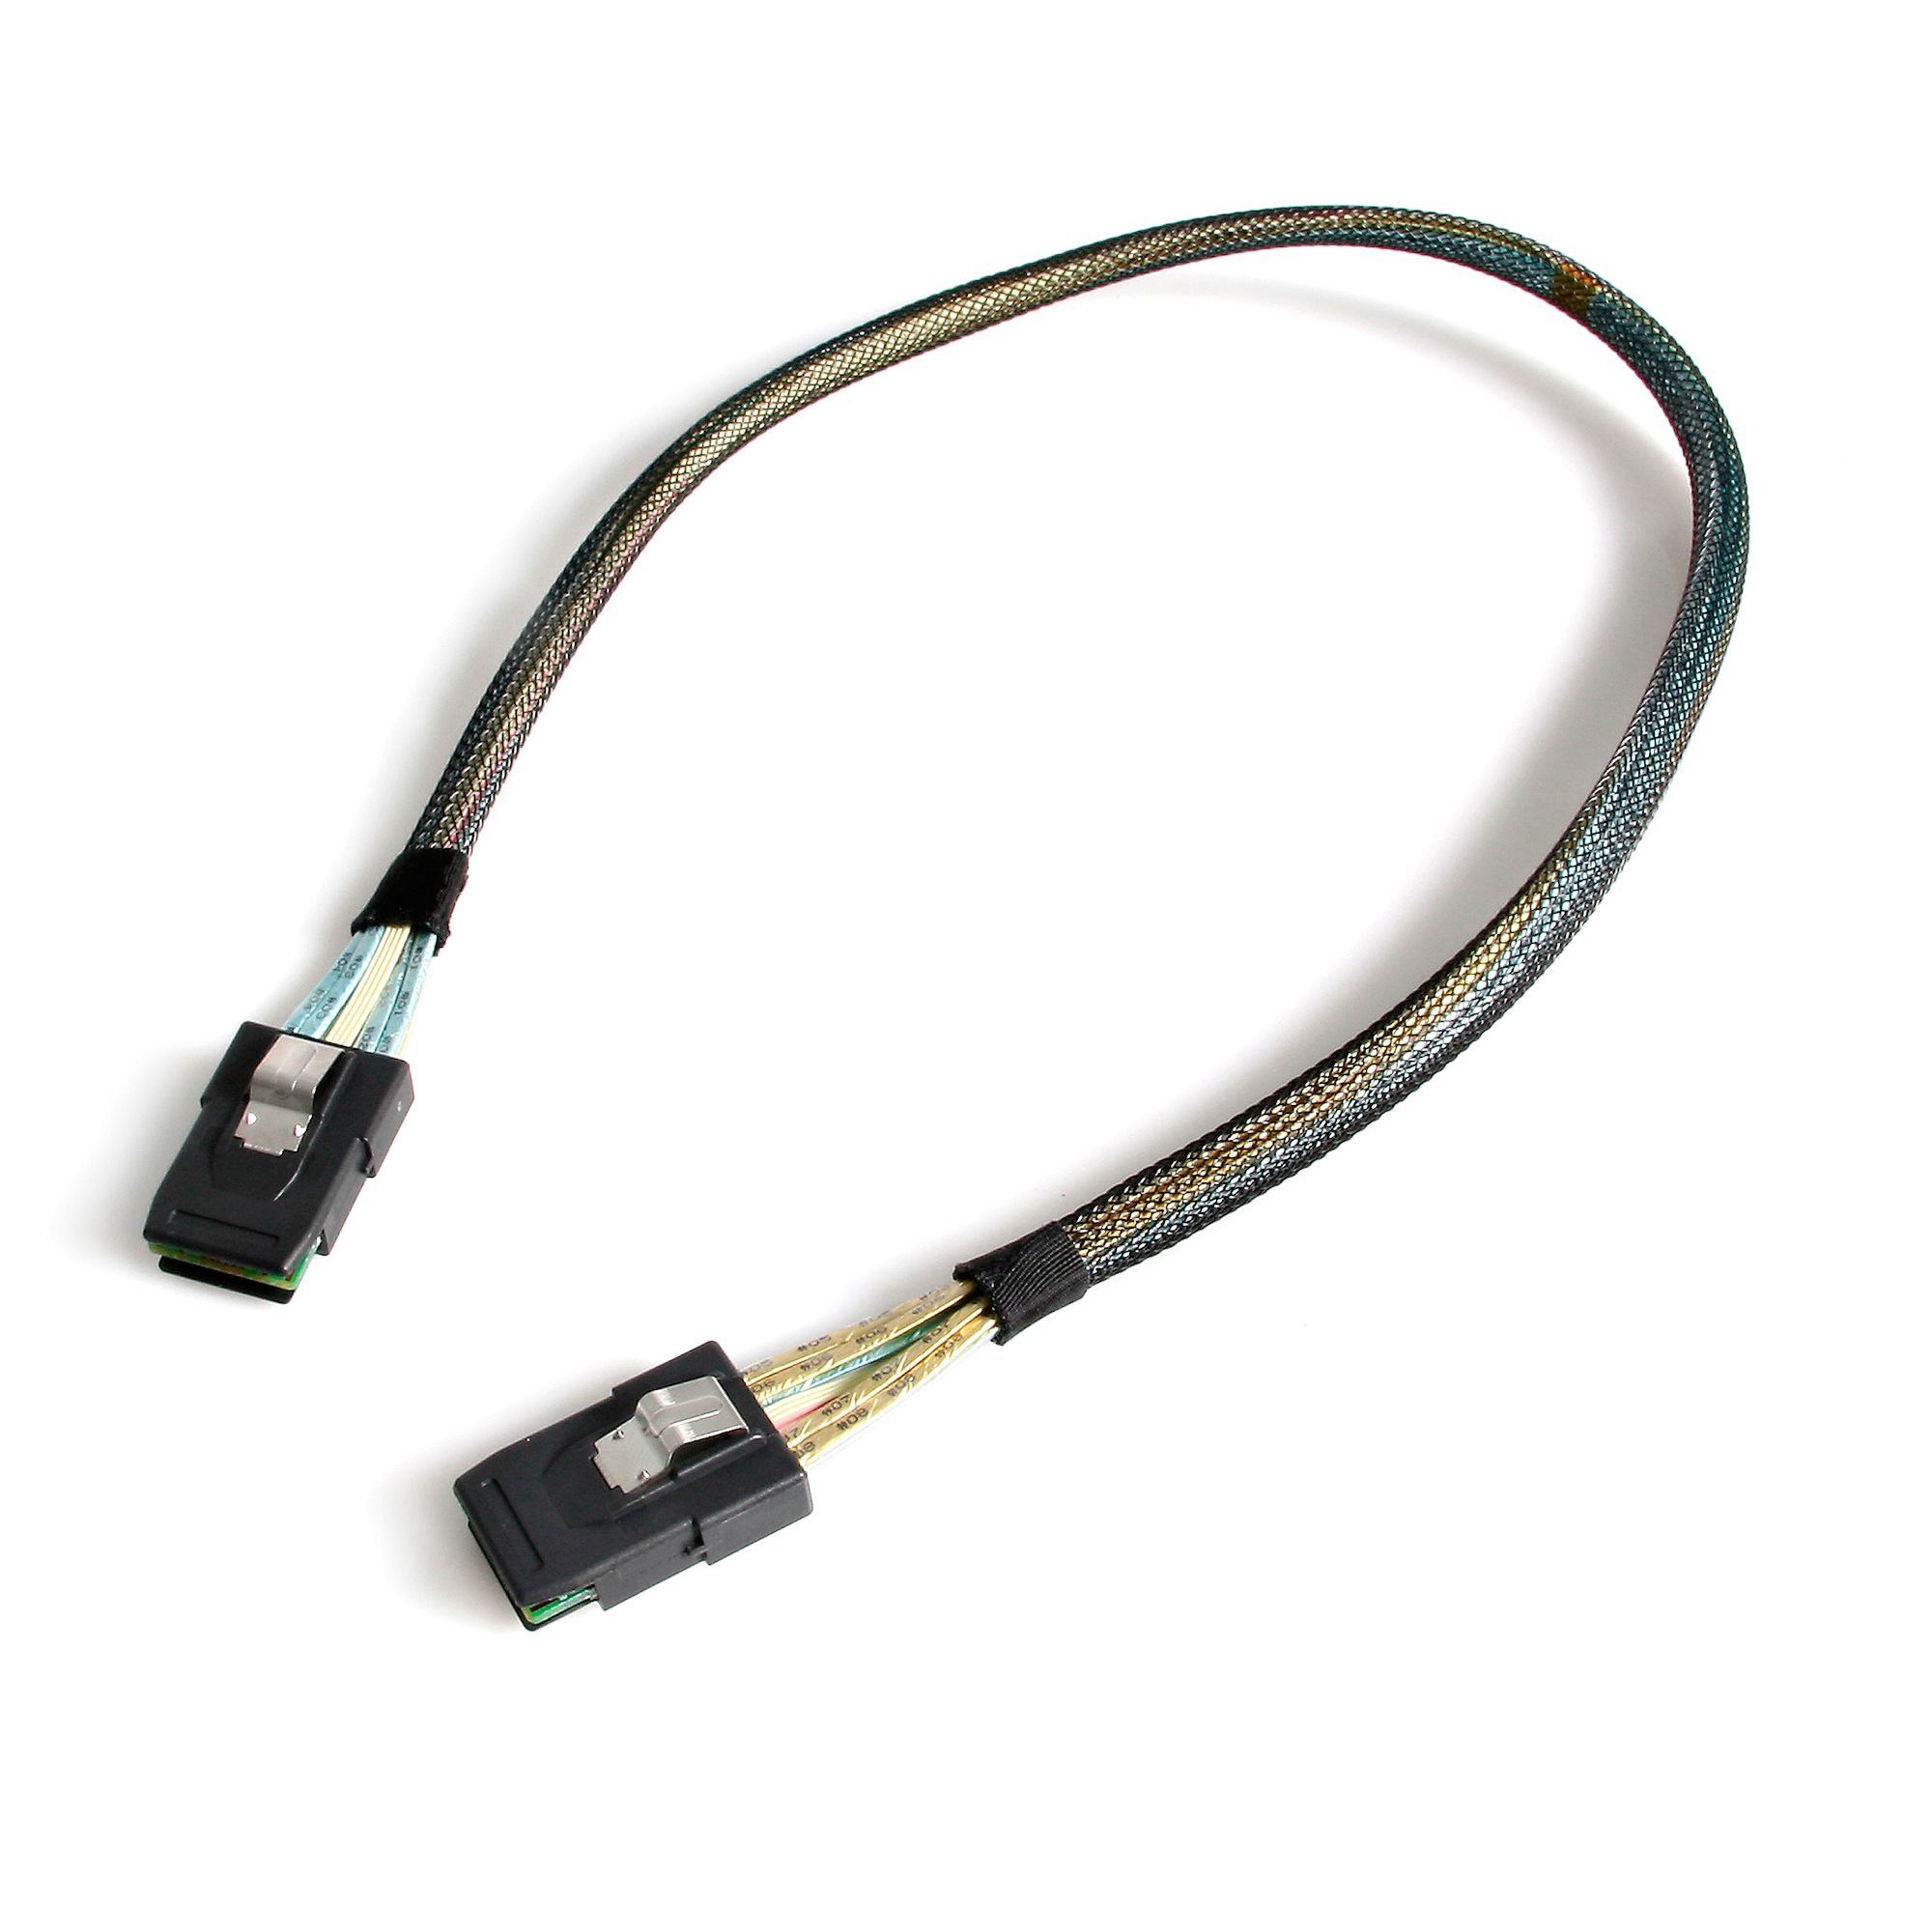 50cm Internal Mini-SAS Cable SFF-8087 To SFF-8087 w/ Sidebands